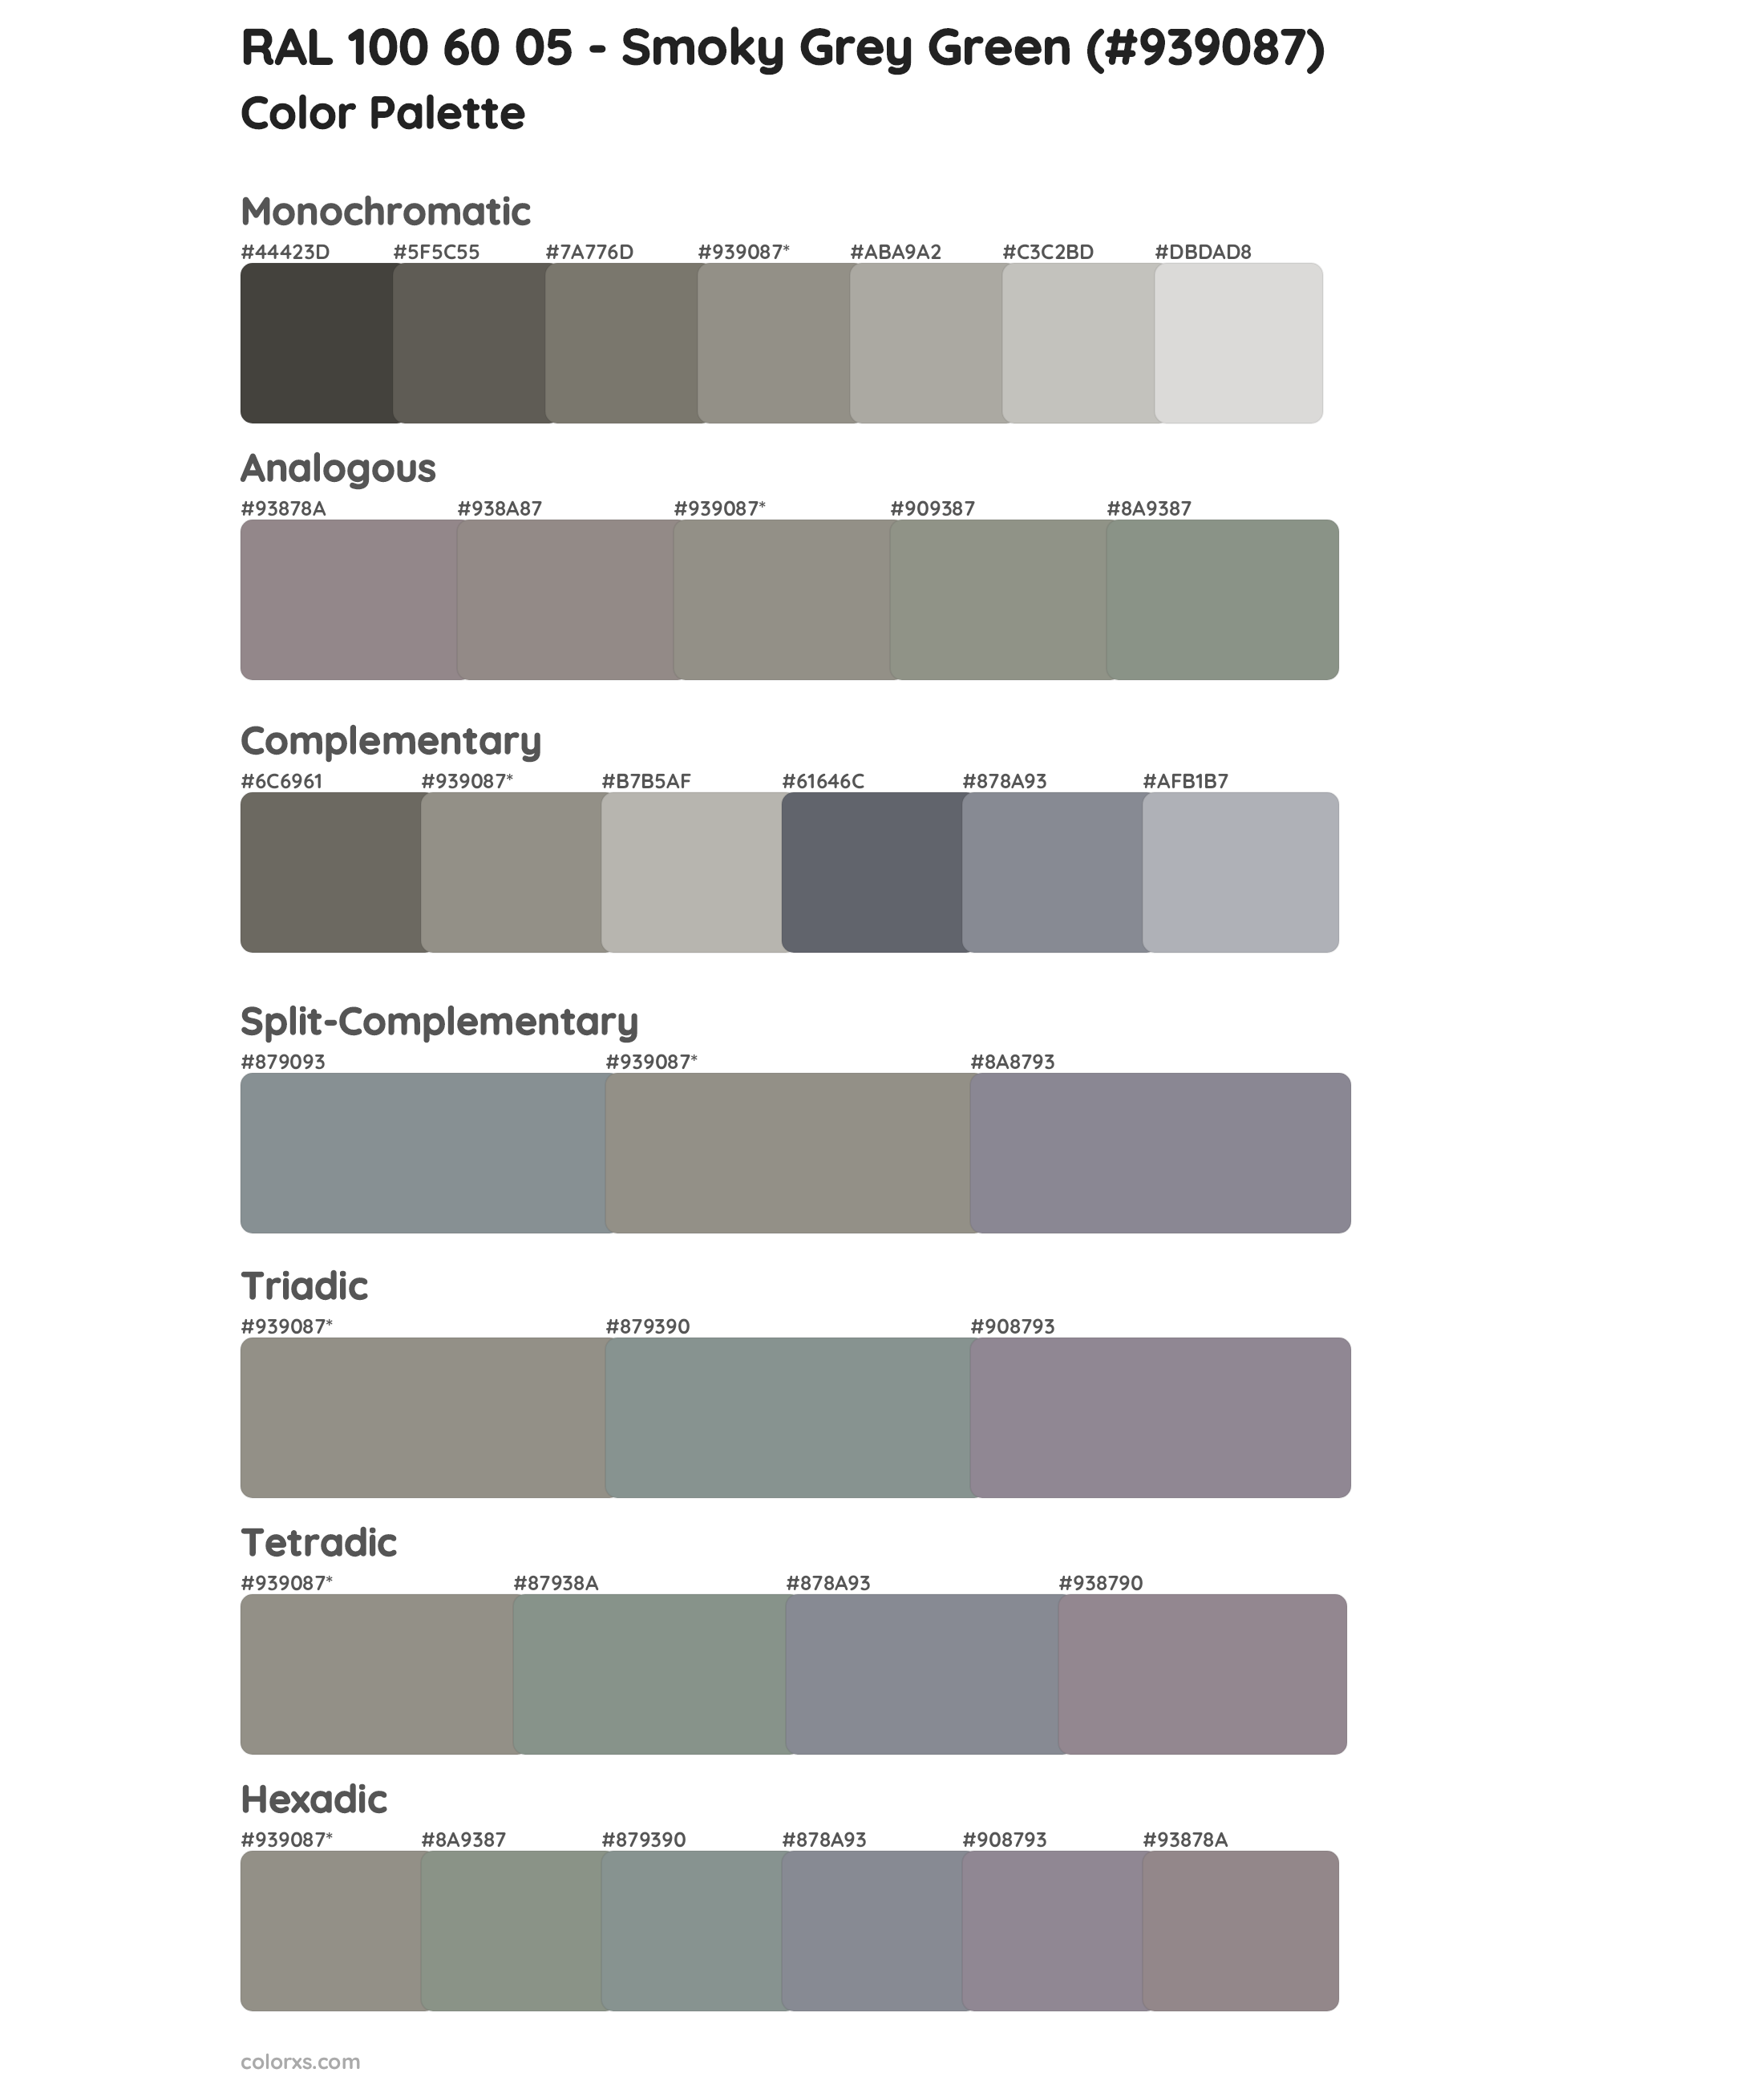 RAL 100 60 05 - Smoky Grey Green Color Scheme Palettes